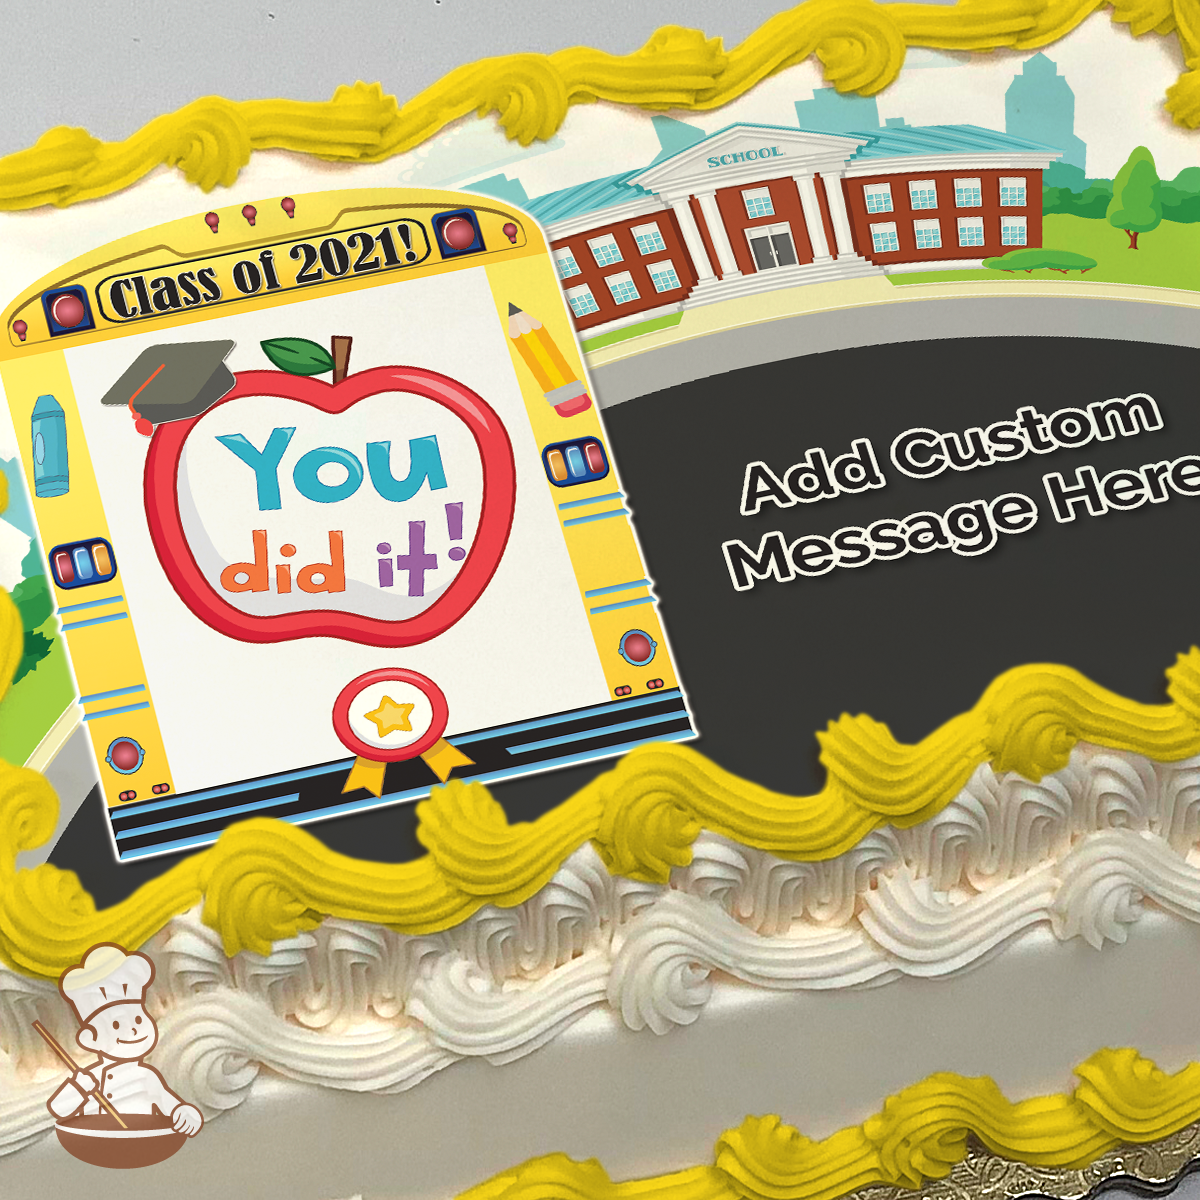 Animal School Bus cake singapore - River Ash Bakery